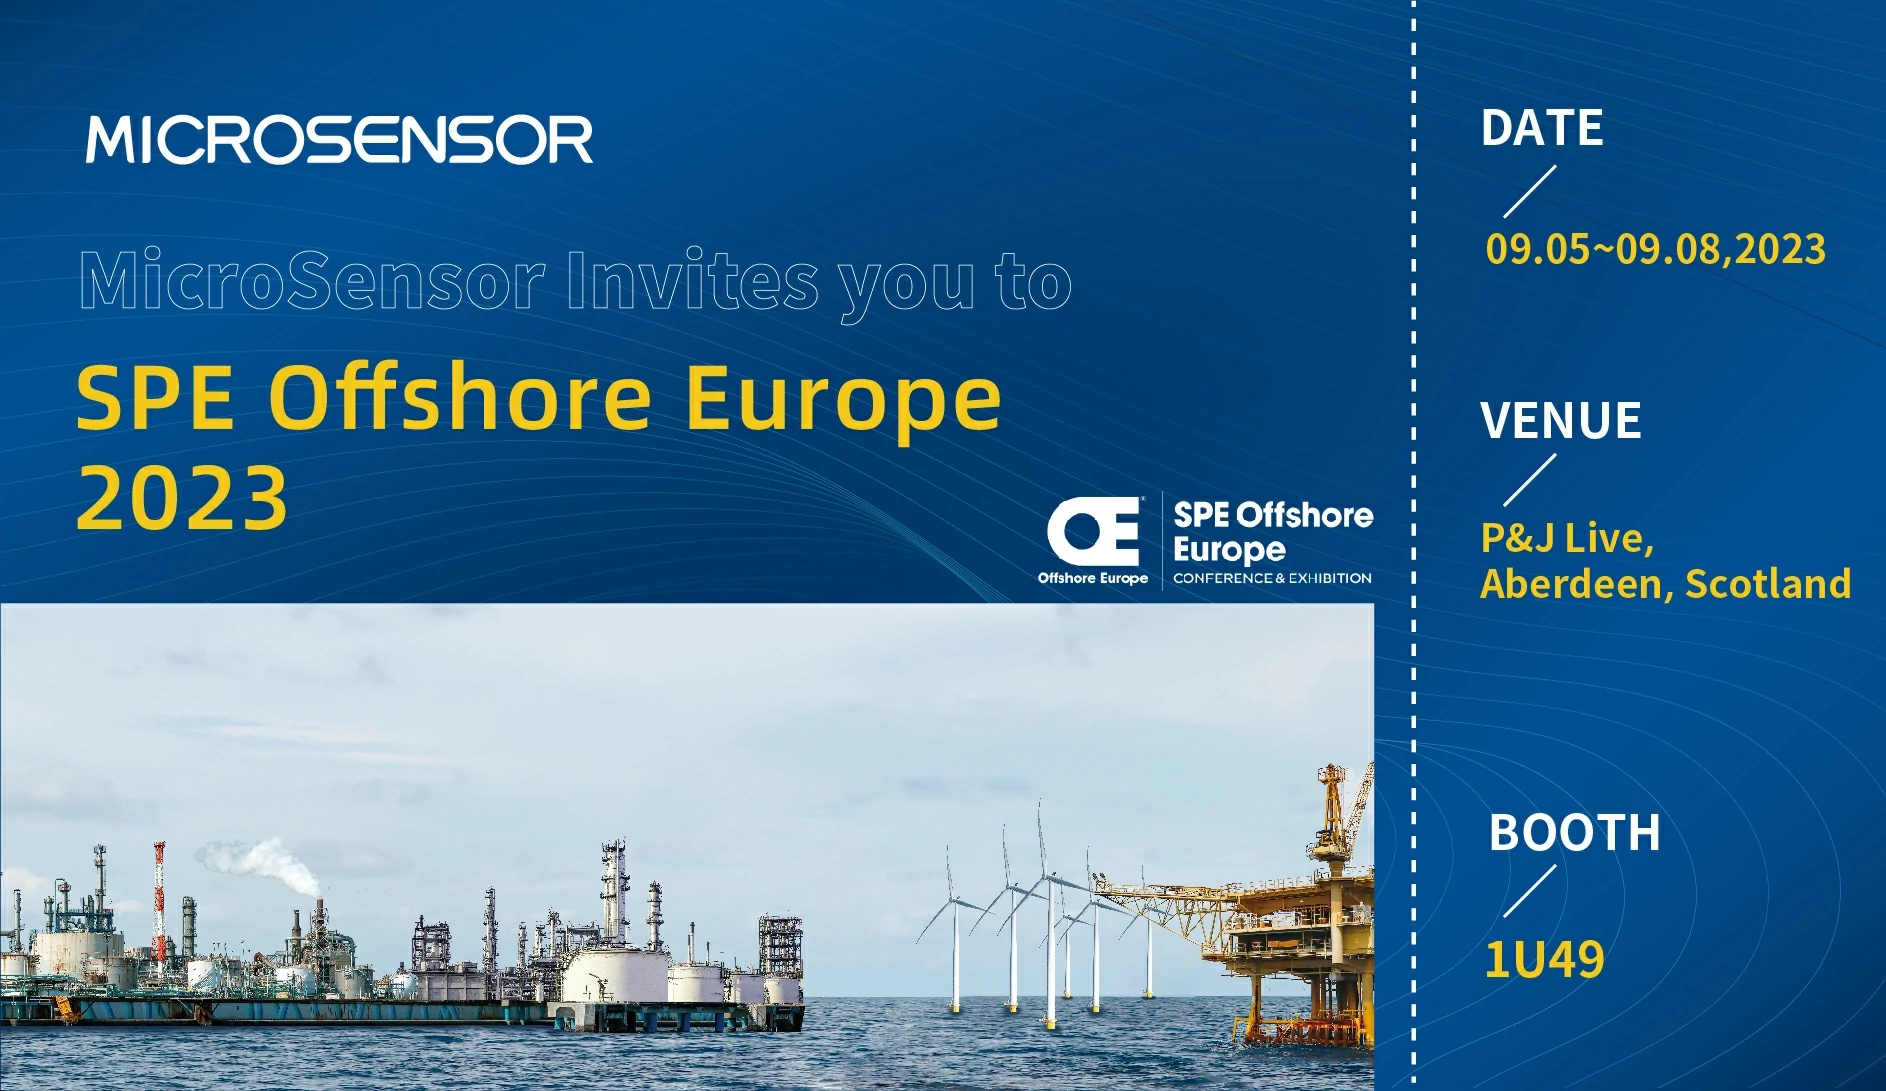 Meet Micro Sensor at SPE Offshore Europe 2023